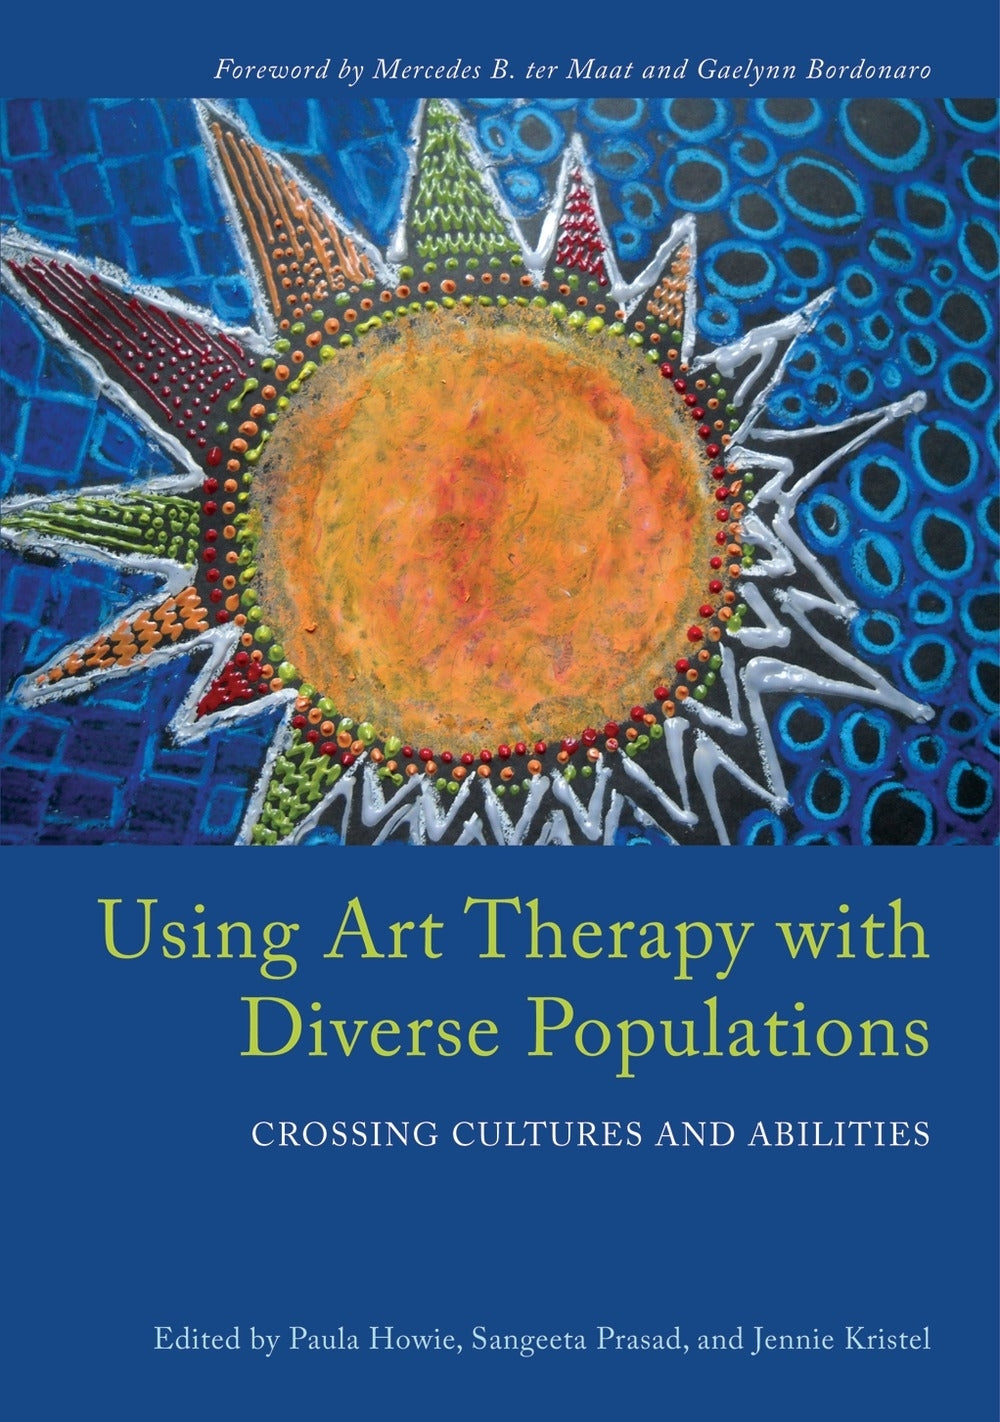 Using Art Therapy with Diverse Populations by Paula Howie, Sangeeta Prasad, Jennie Kristel, Mercedes B. ter Maat, Gaelynn P. Wolf Bordonaro, No Author Listed